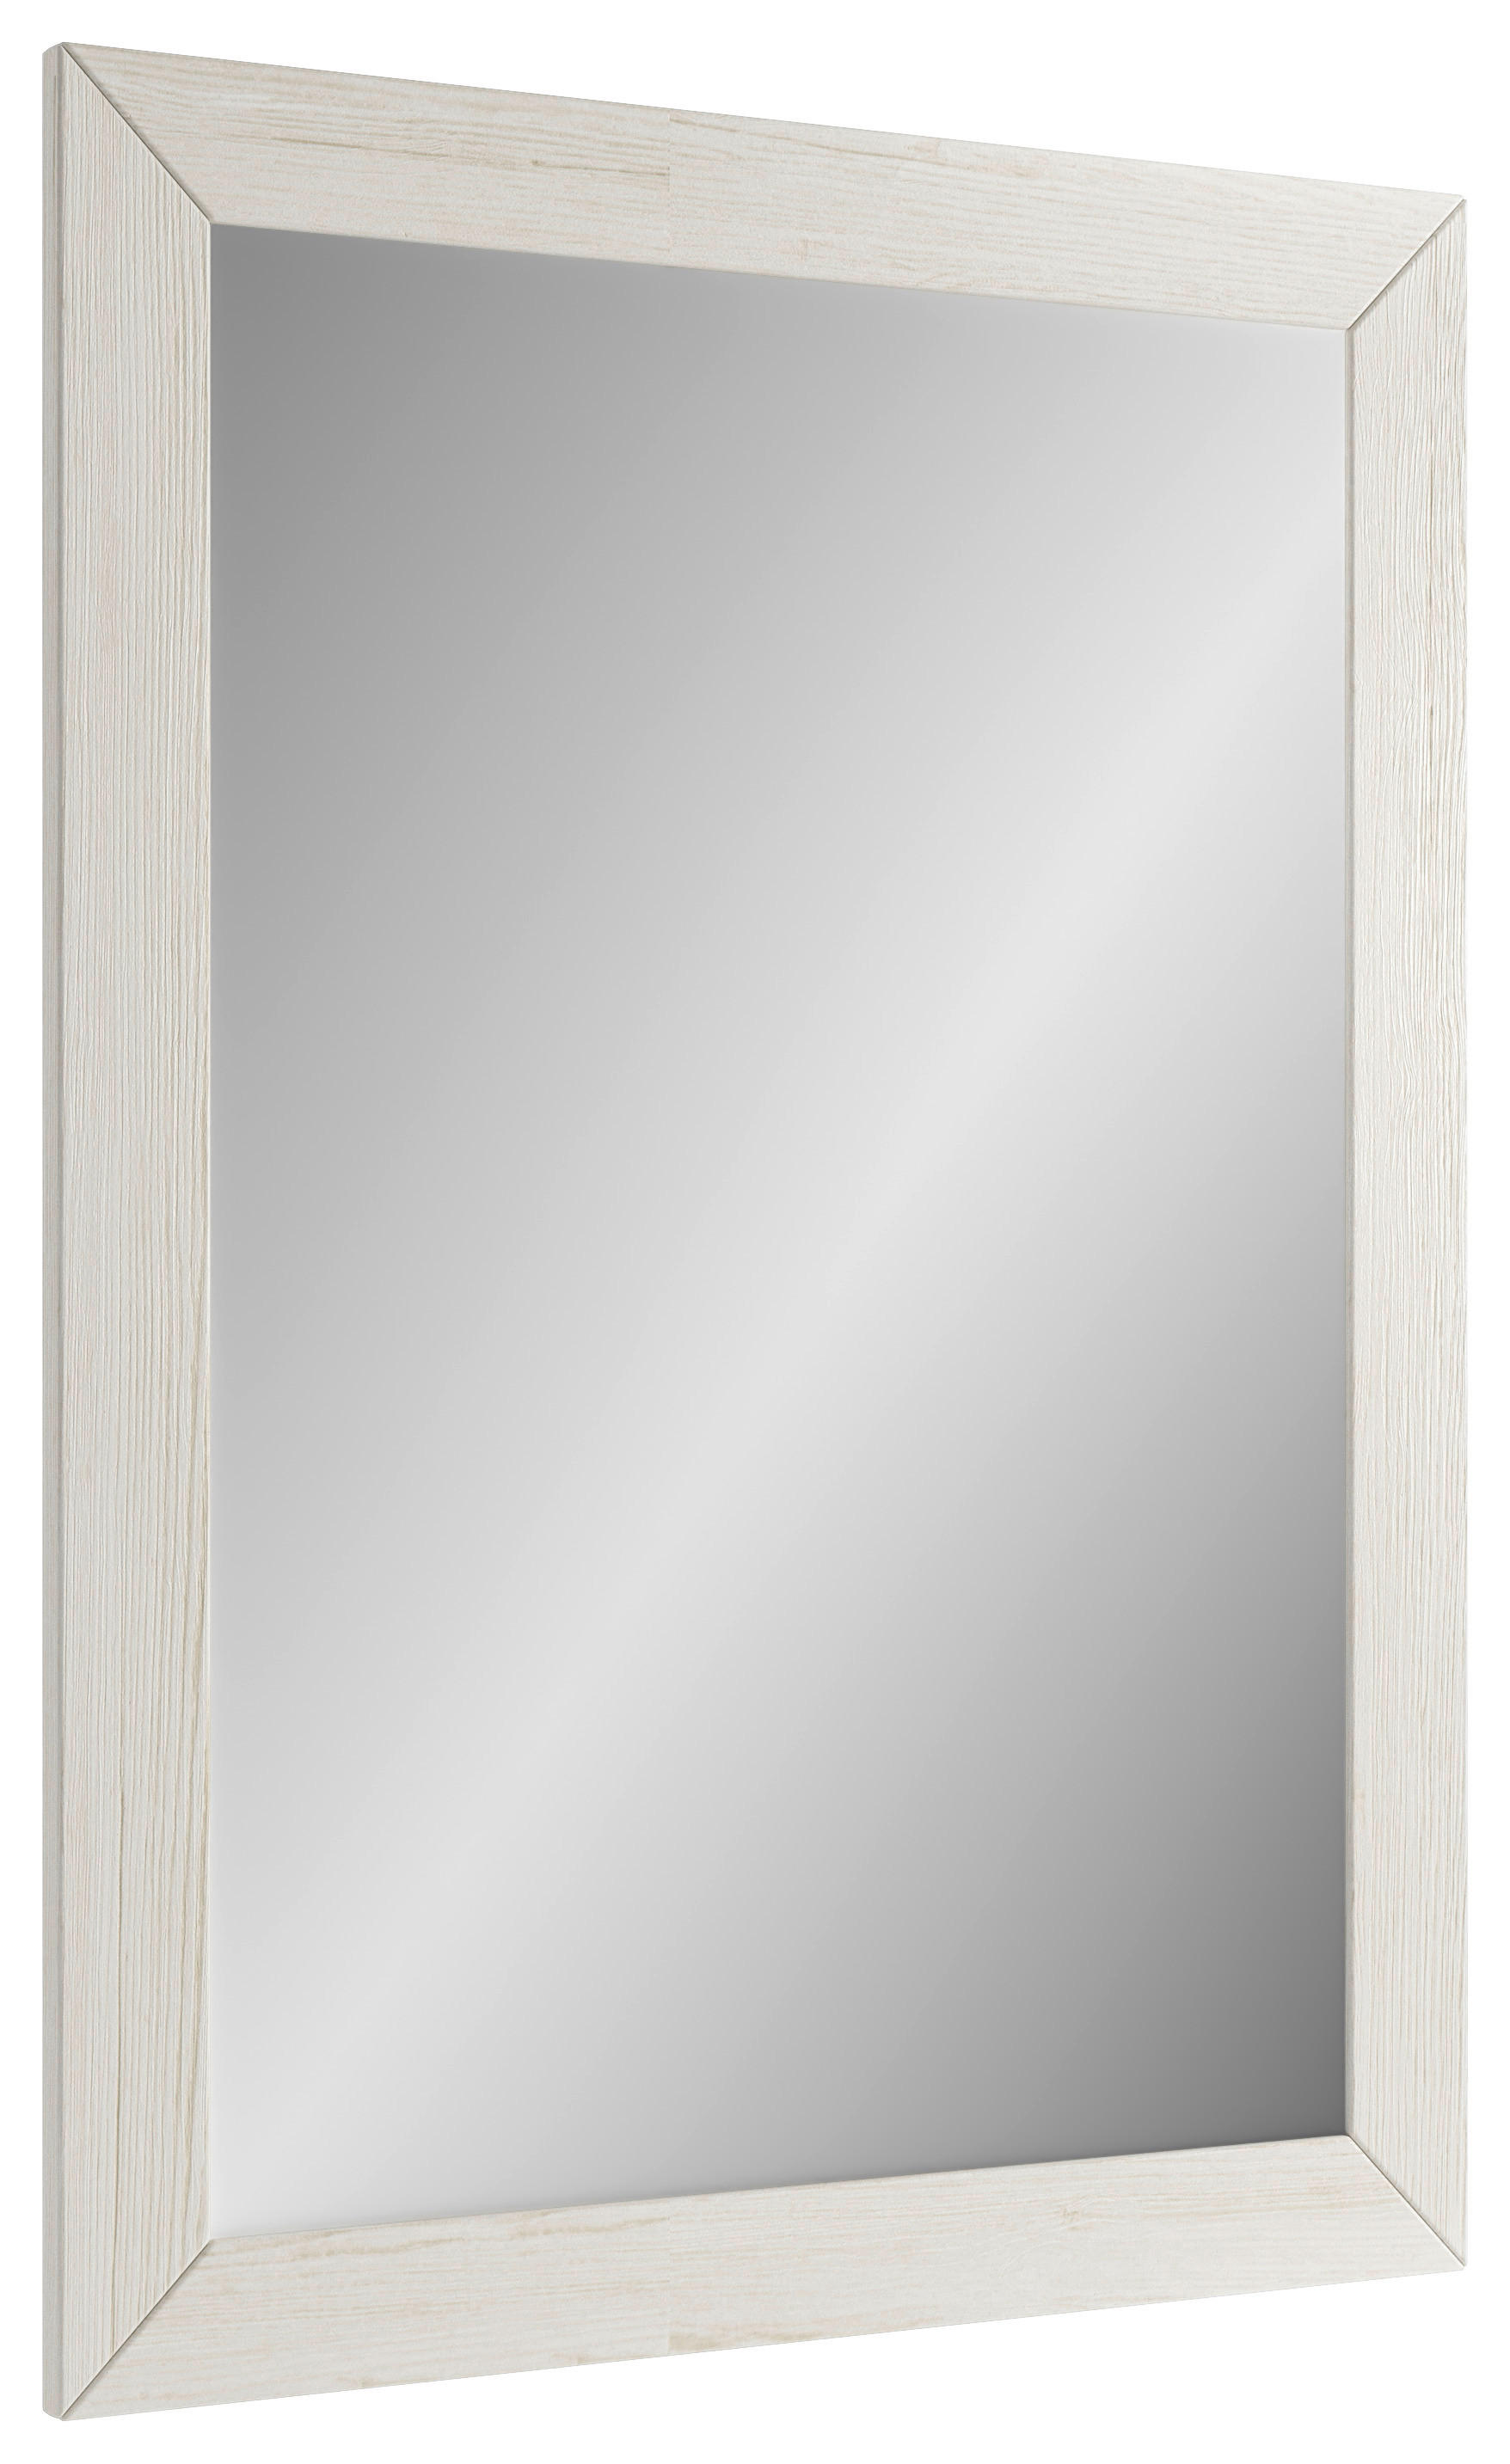 WANDSPIEGEL 100/70/2 cm    - Weiß/Pinienfarben, Basics, Glas/Holzwerkstoff (100/70/2cm) - SetOne by Musterring